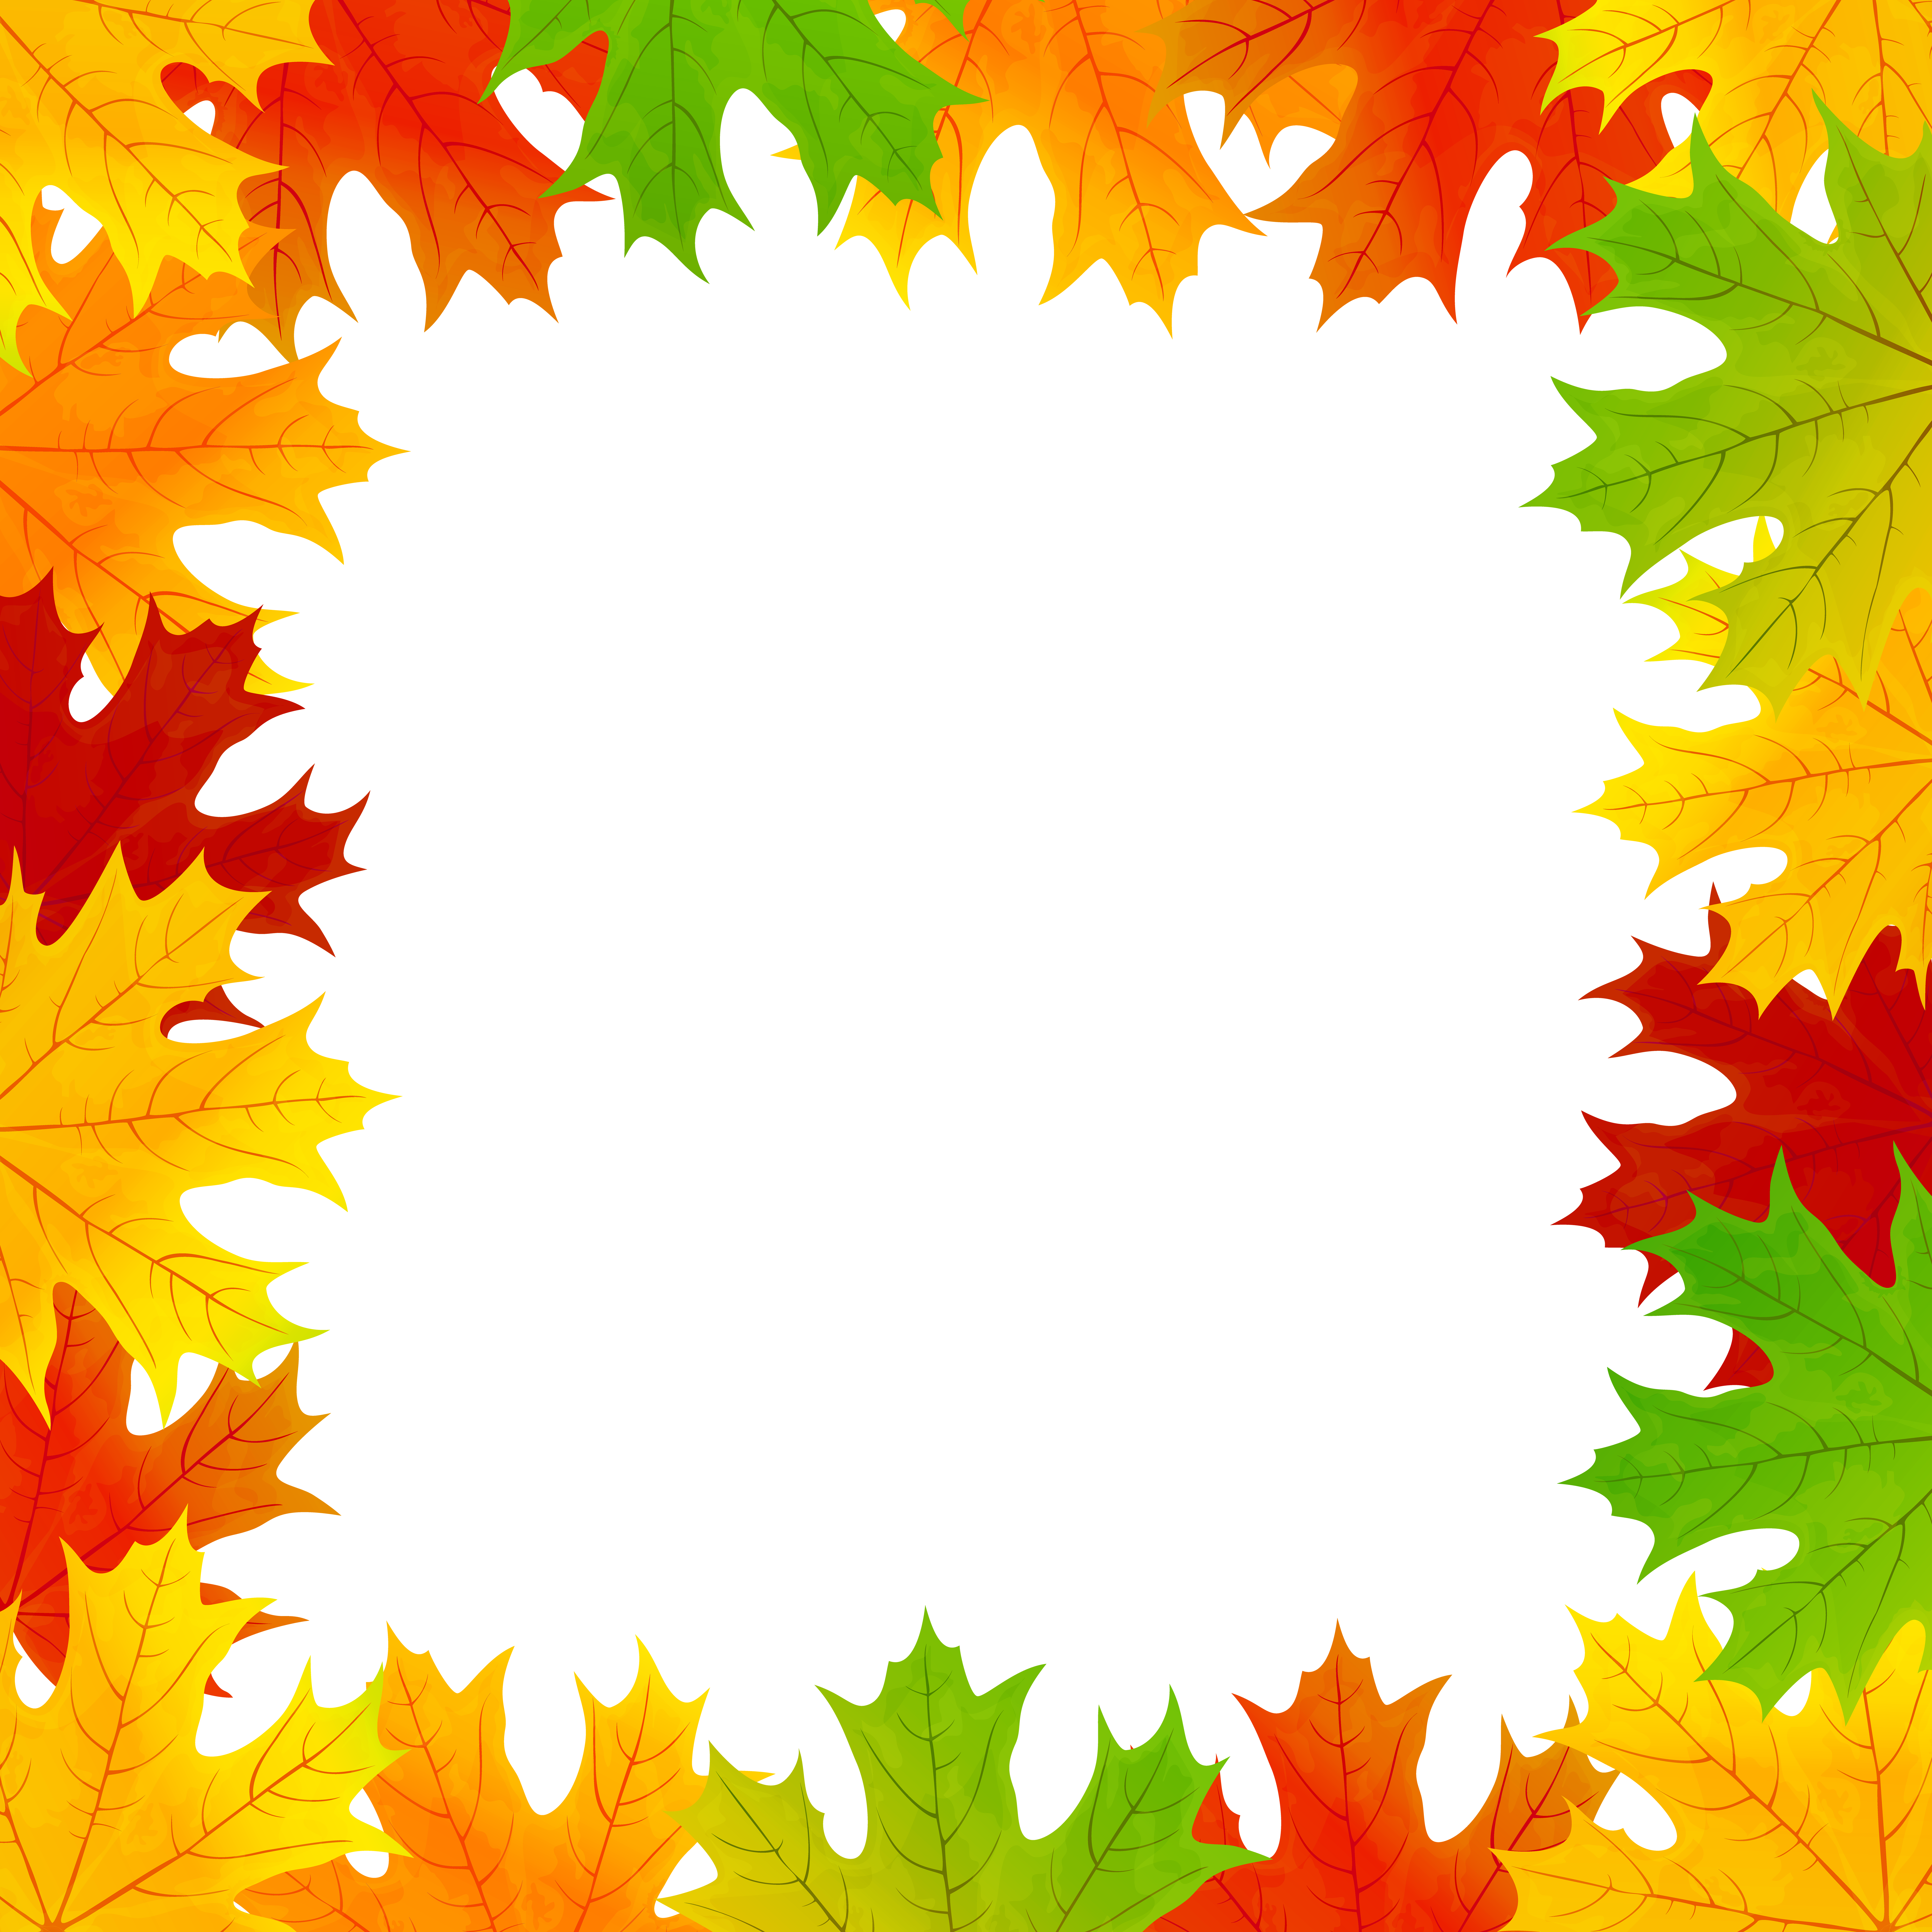 Fall Leaves Border Frame PNG Clip Art Image.